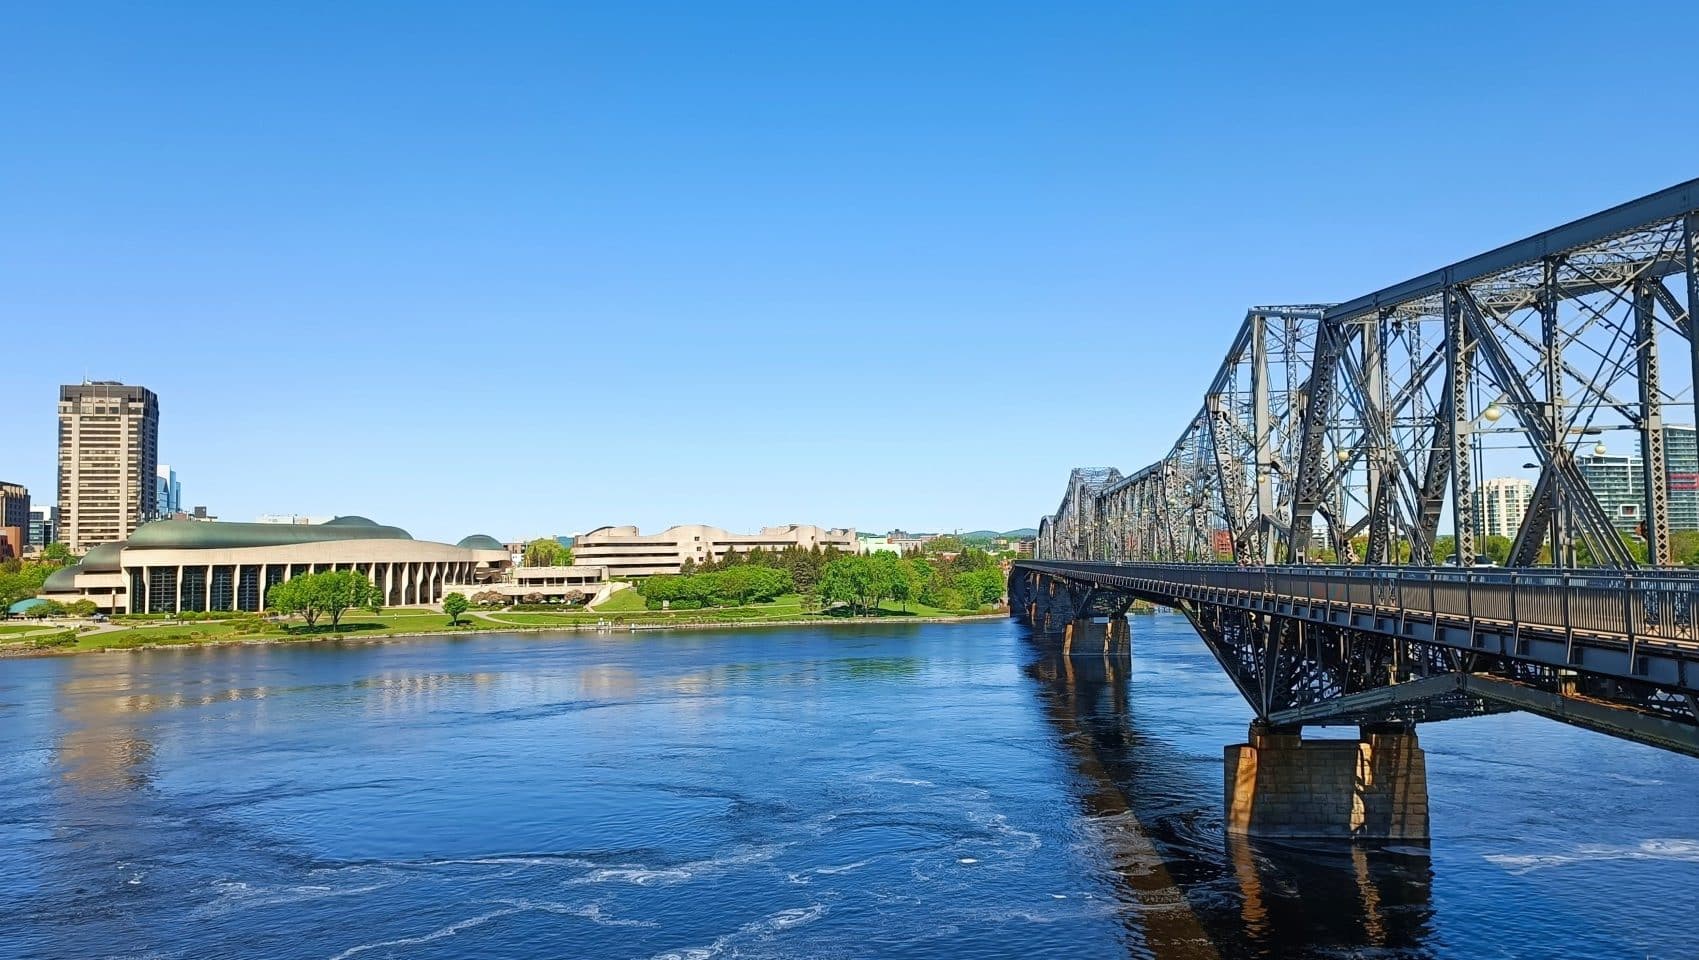 The Alexandra Bridge connects Ottawa and Gatineau